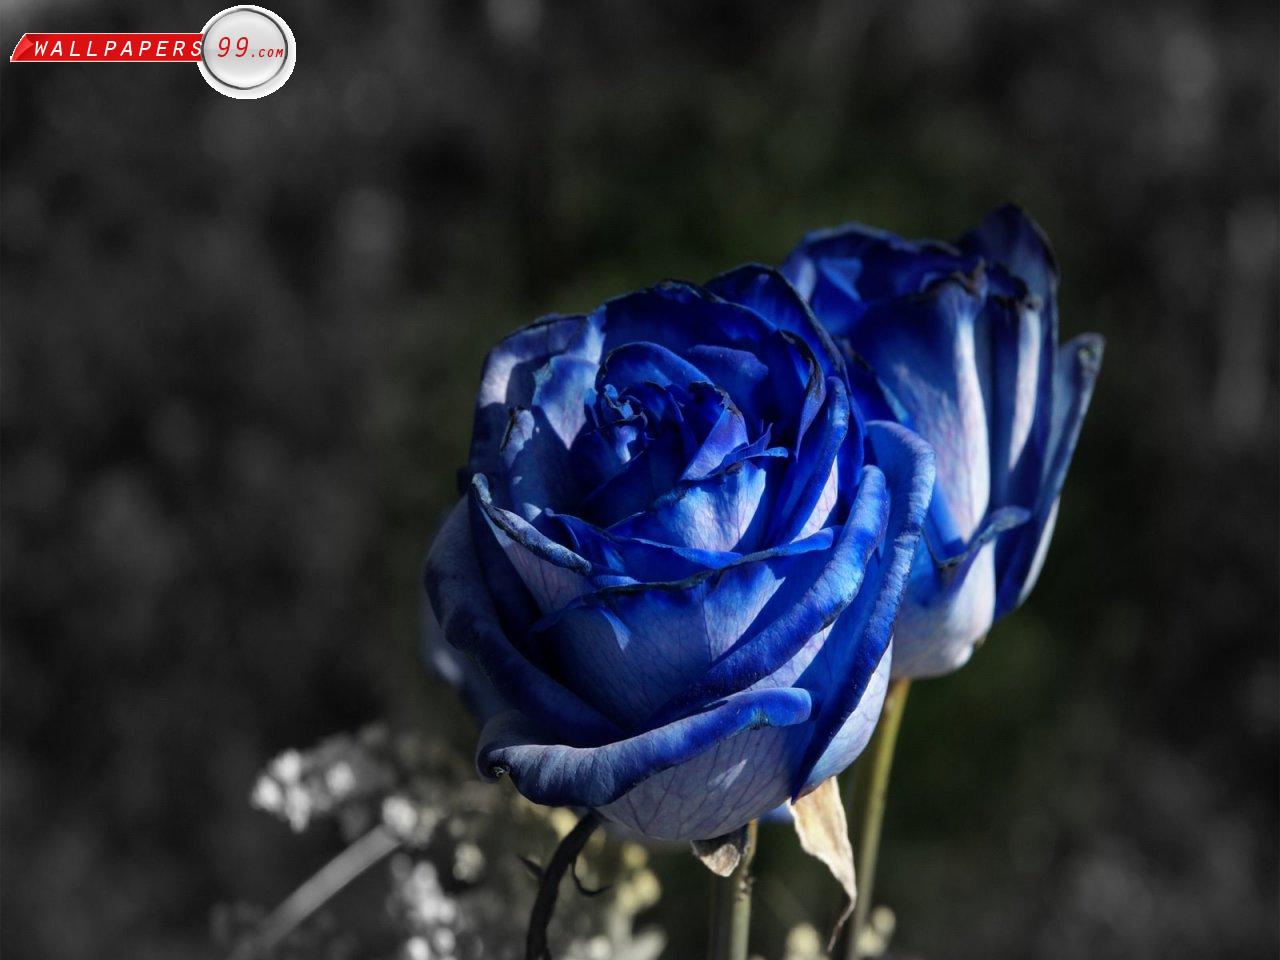 HD Wallpaper of Blue Rose | HD Wallpapers